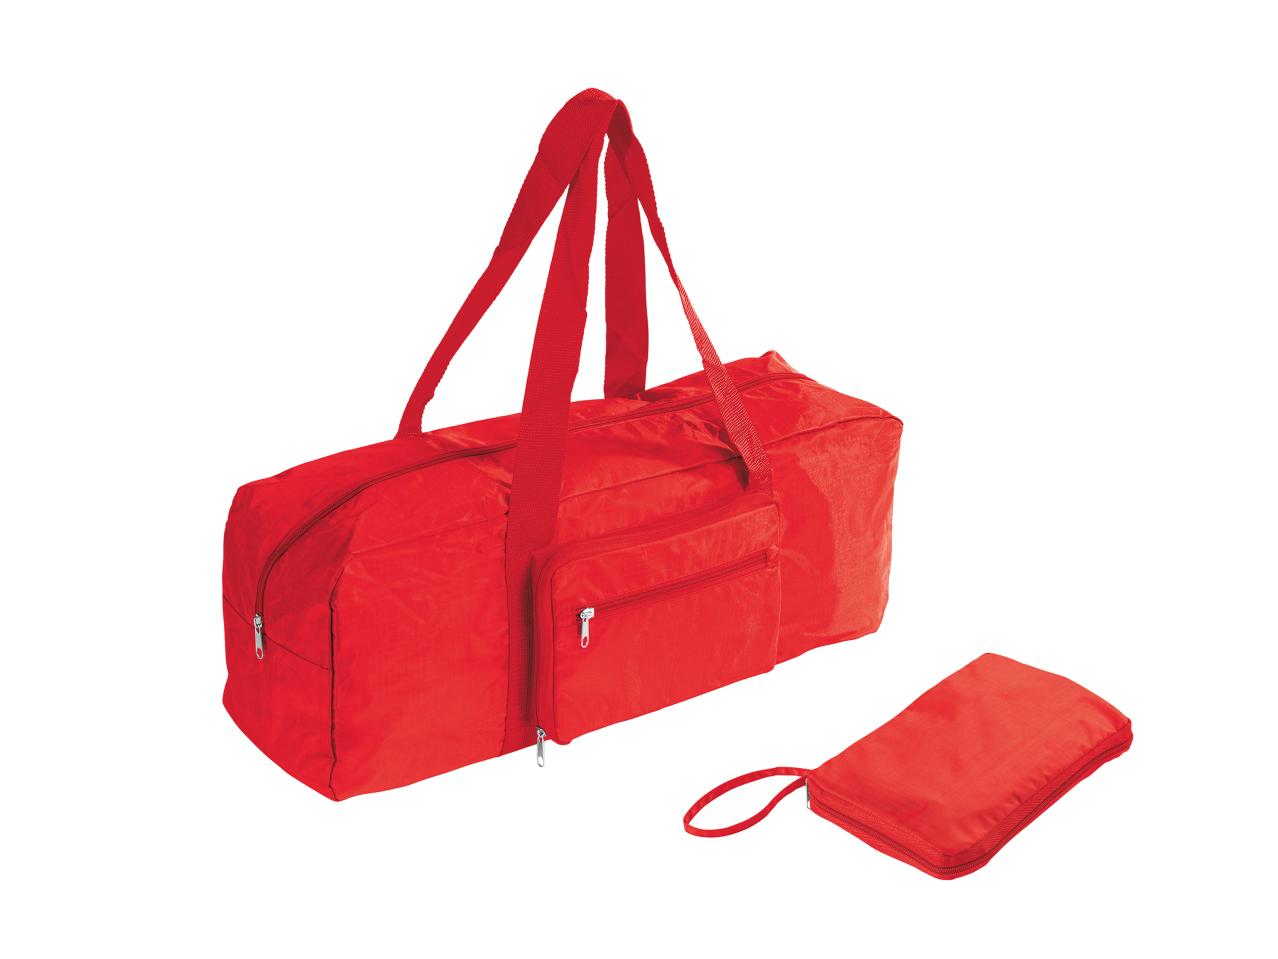 Topmove Foldable Bag1